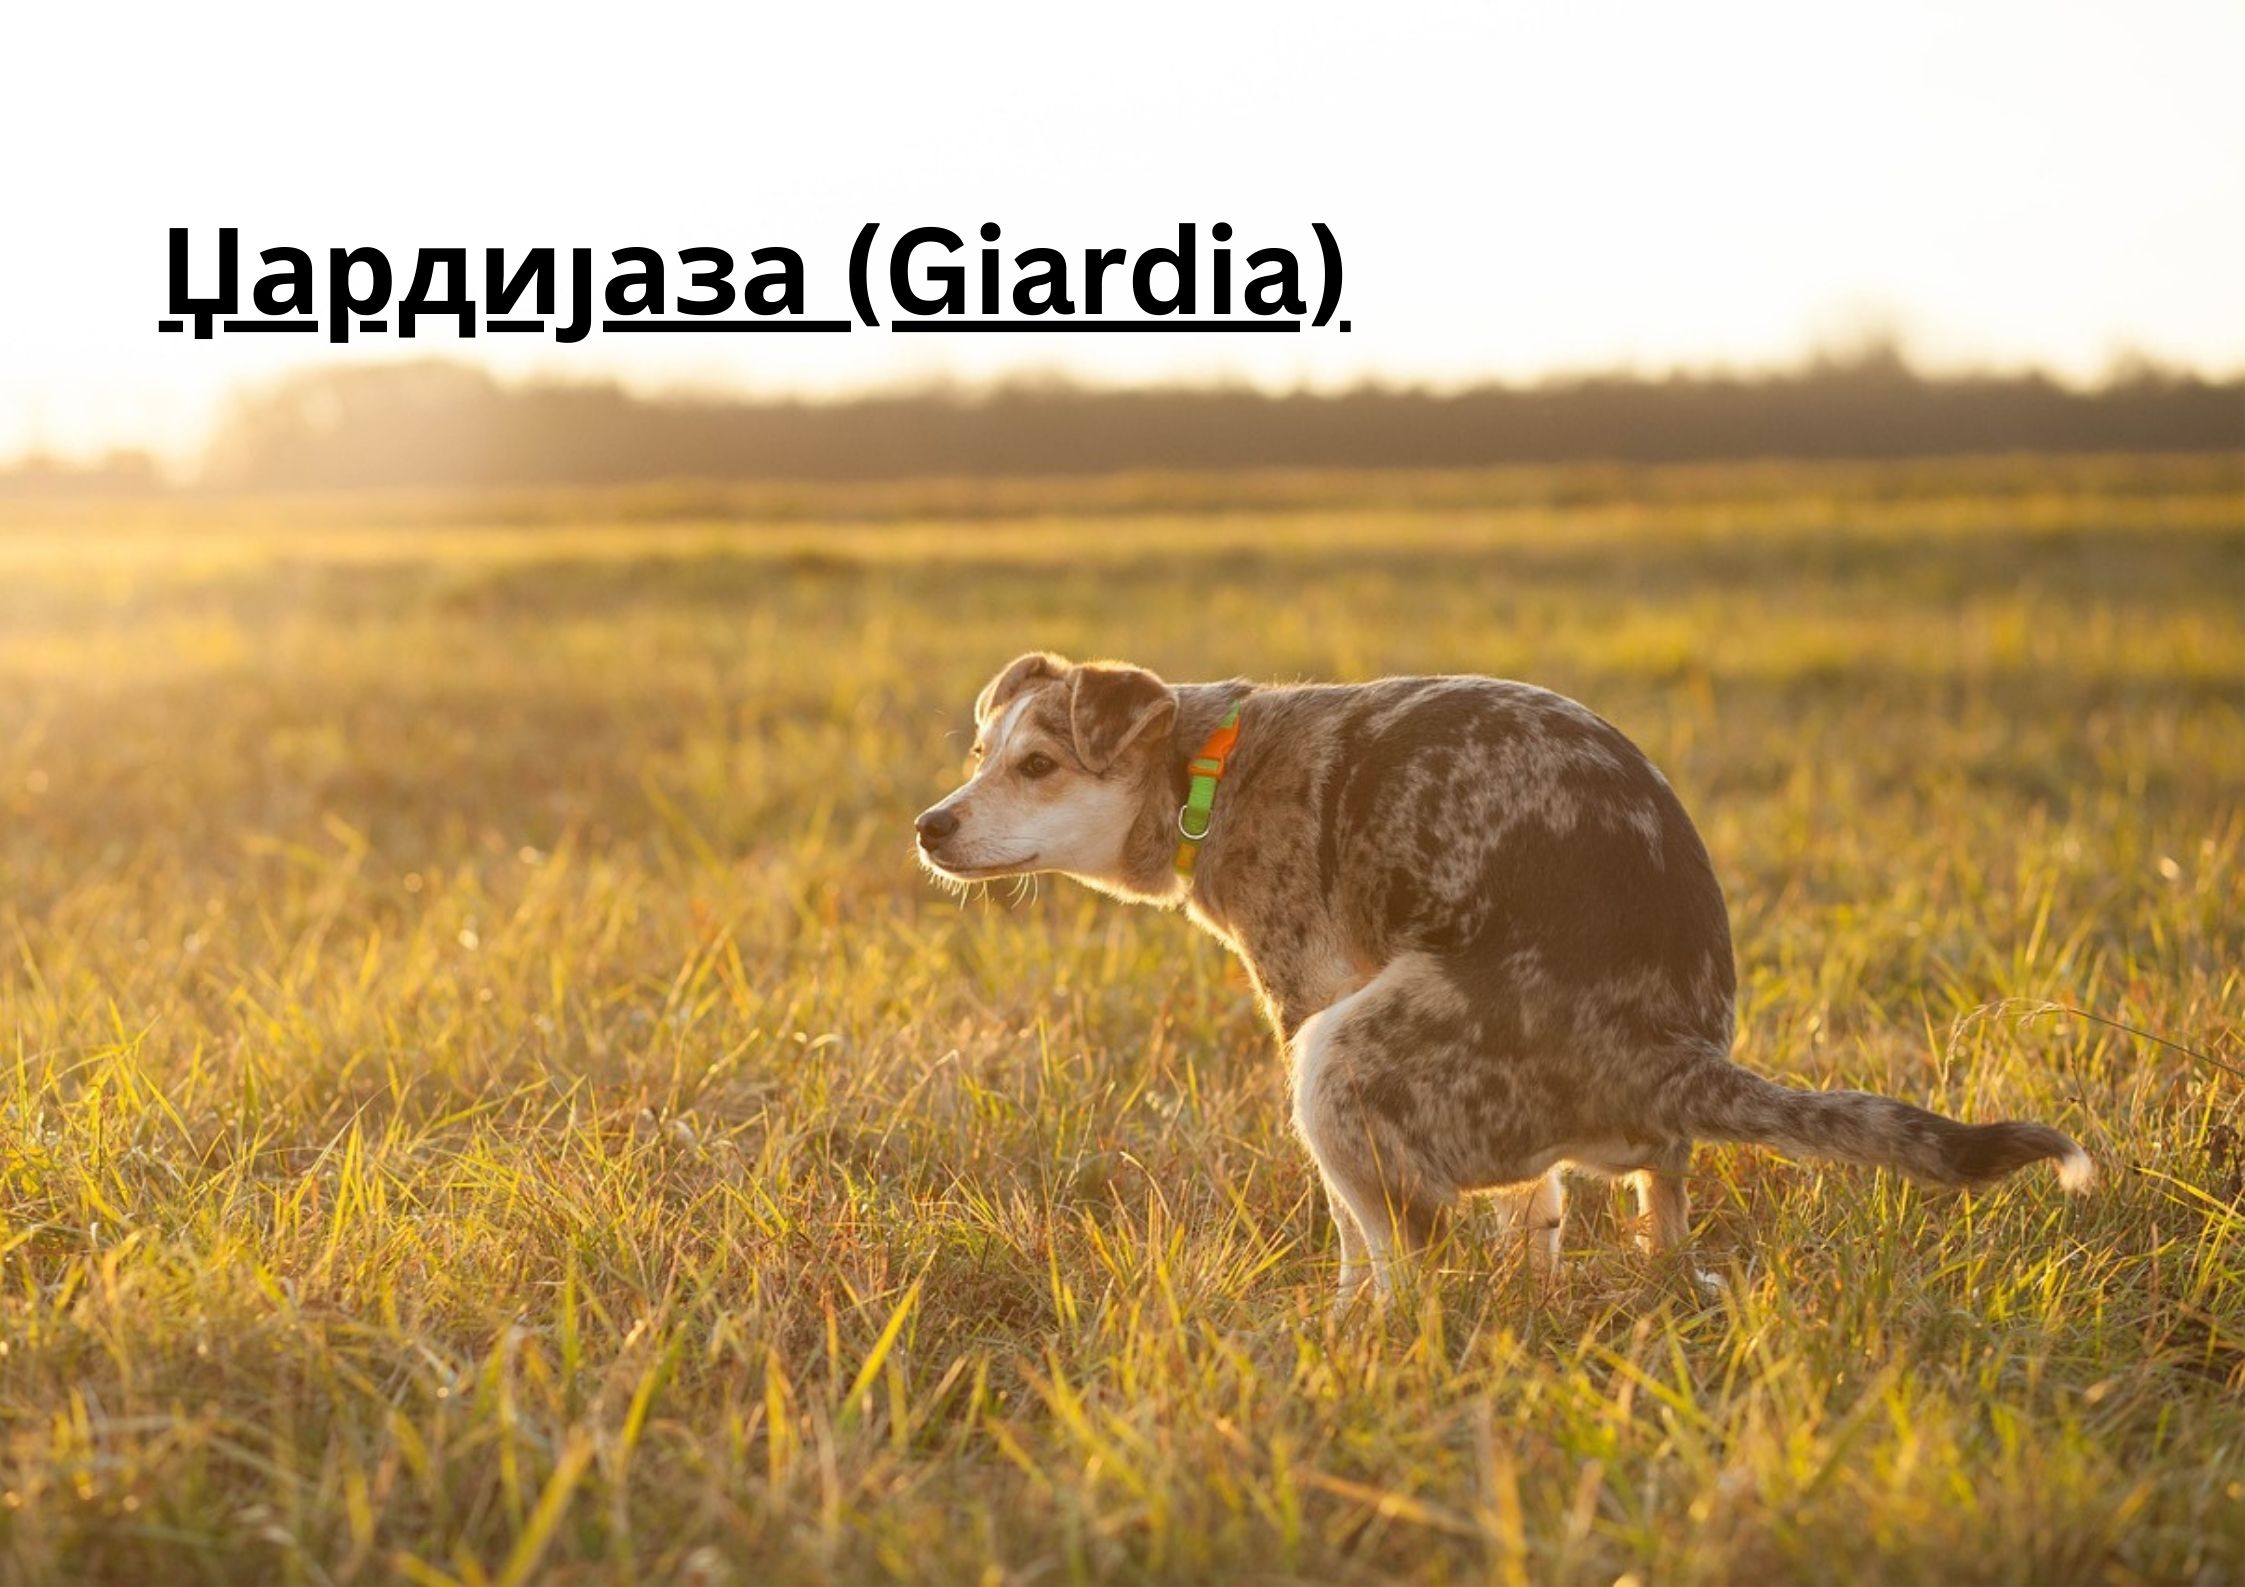 giardia in dogs